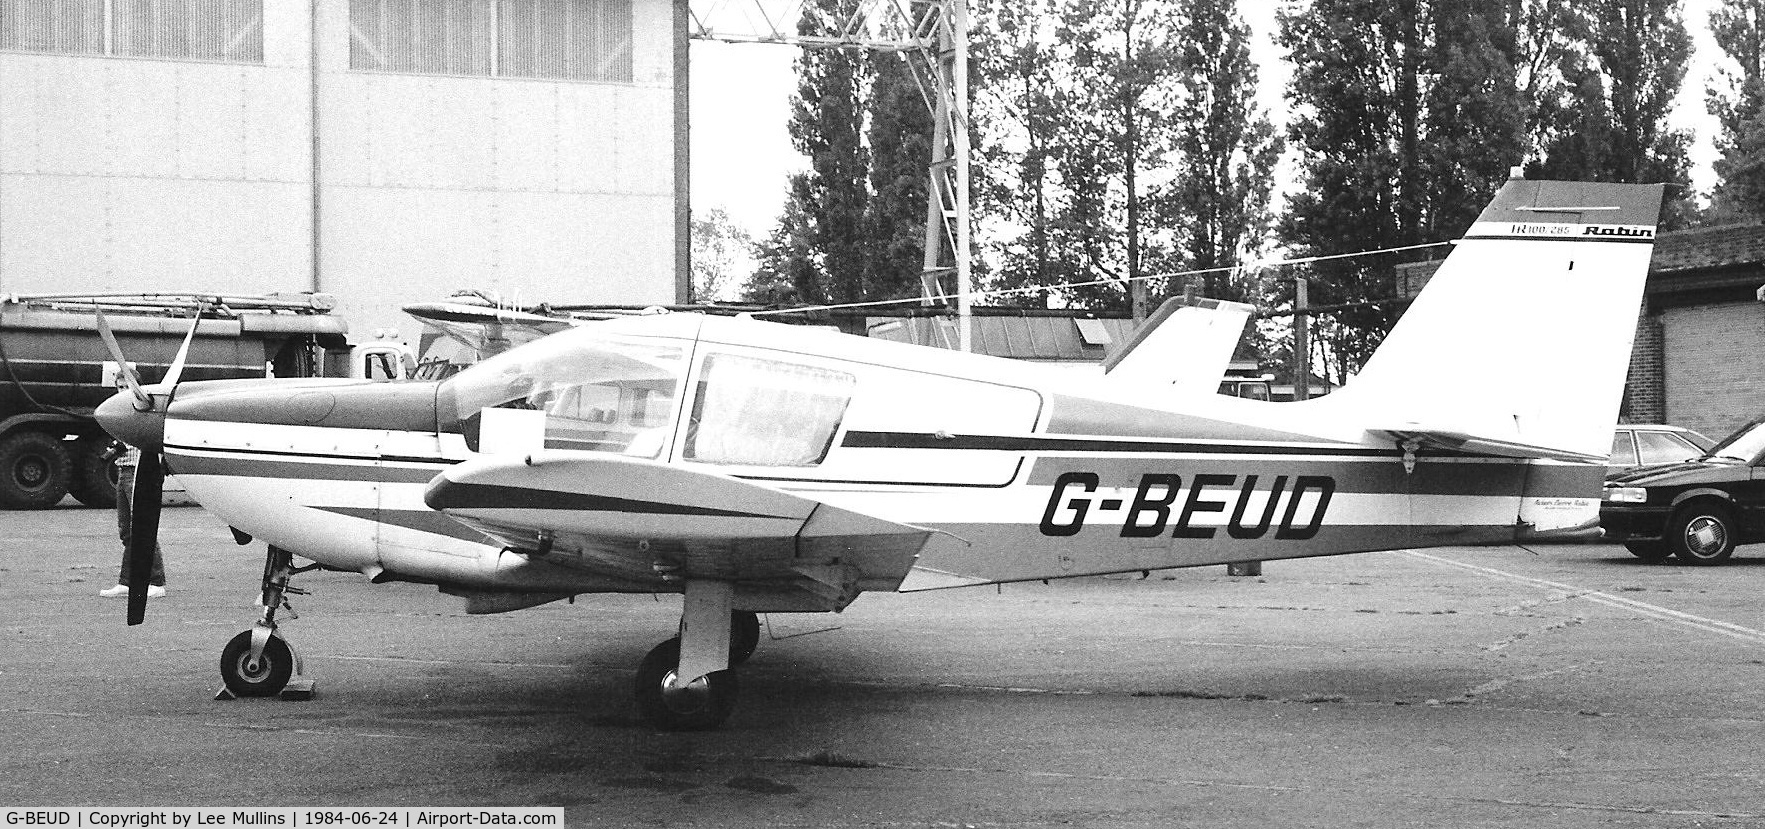 G-BEUD, 1975 Robin HR-100-285R Tiara C/N 534, G-BEUD seen at Cranfield 24/06/1984.